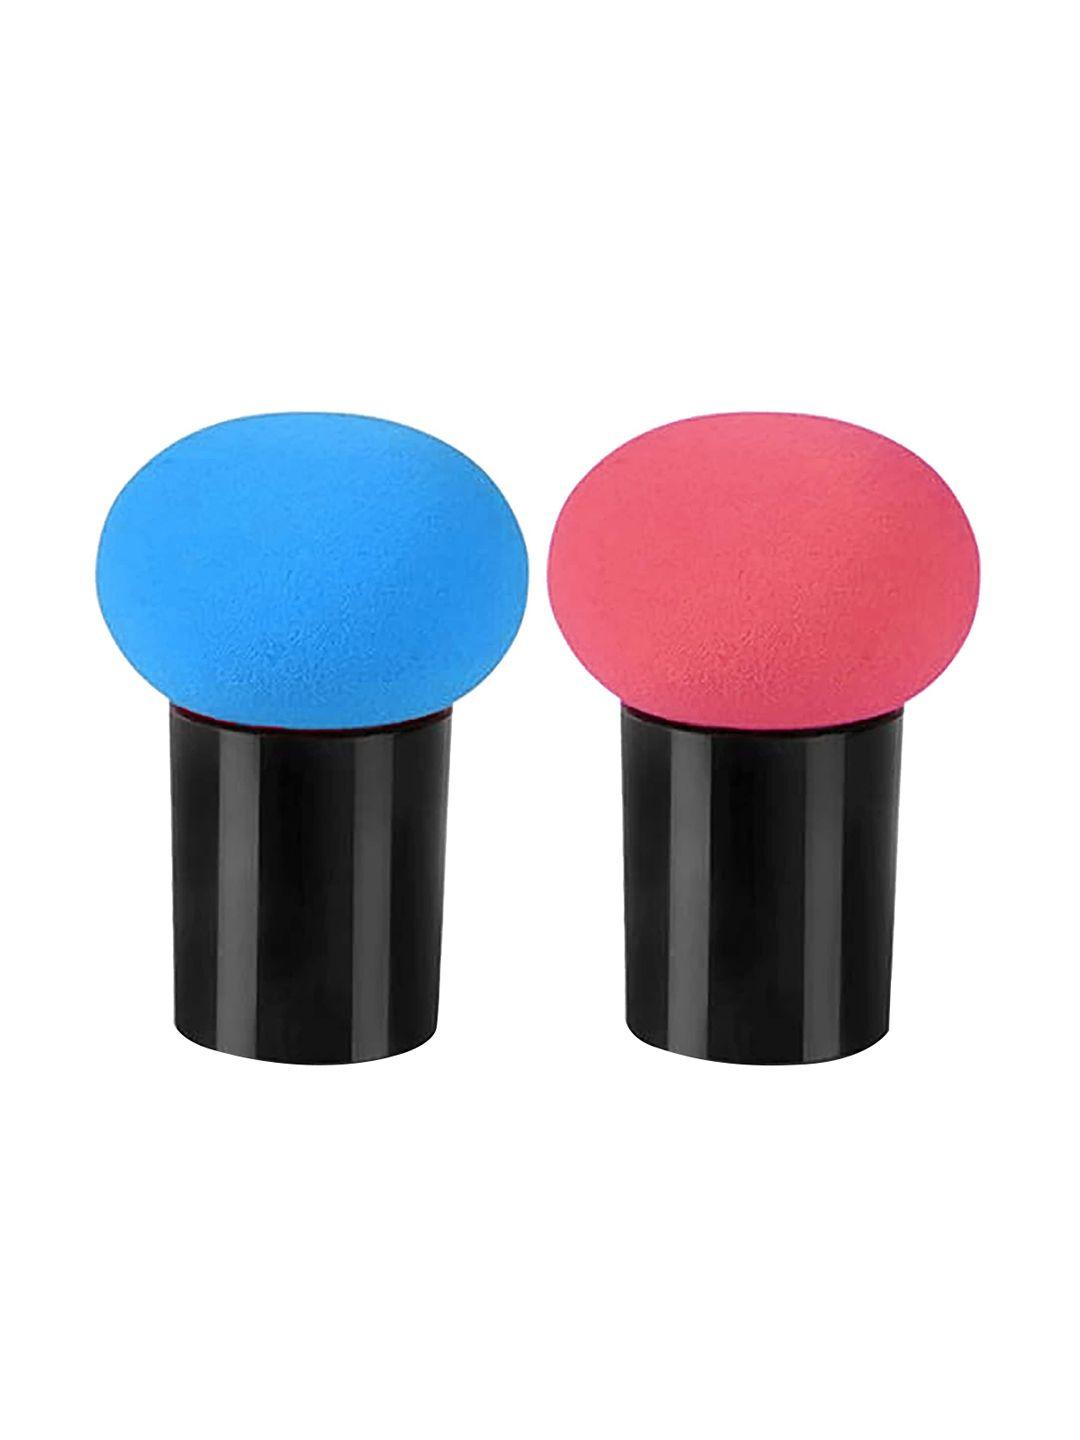 ronzille pack of 2 blue & pink mushroom makeup blender puff sponge